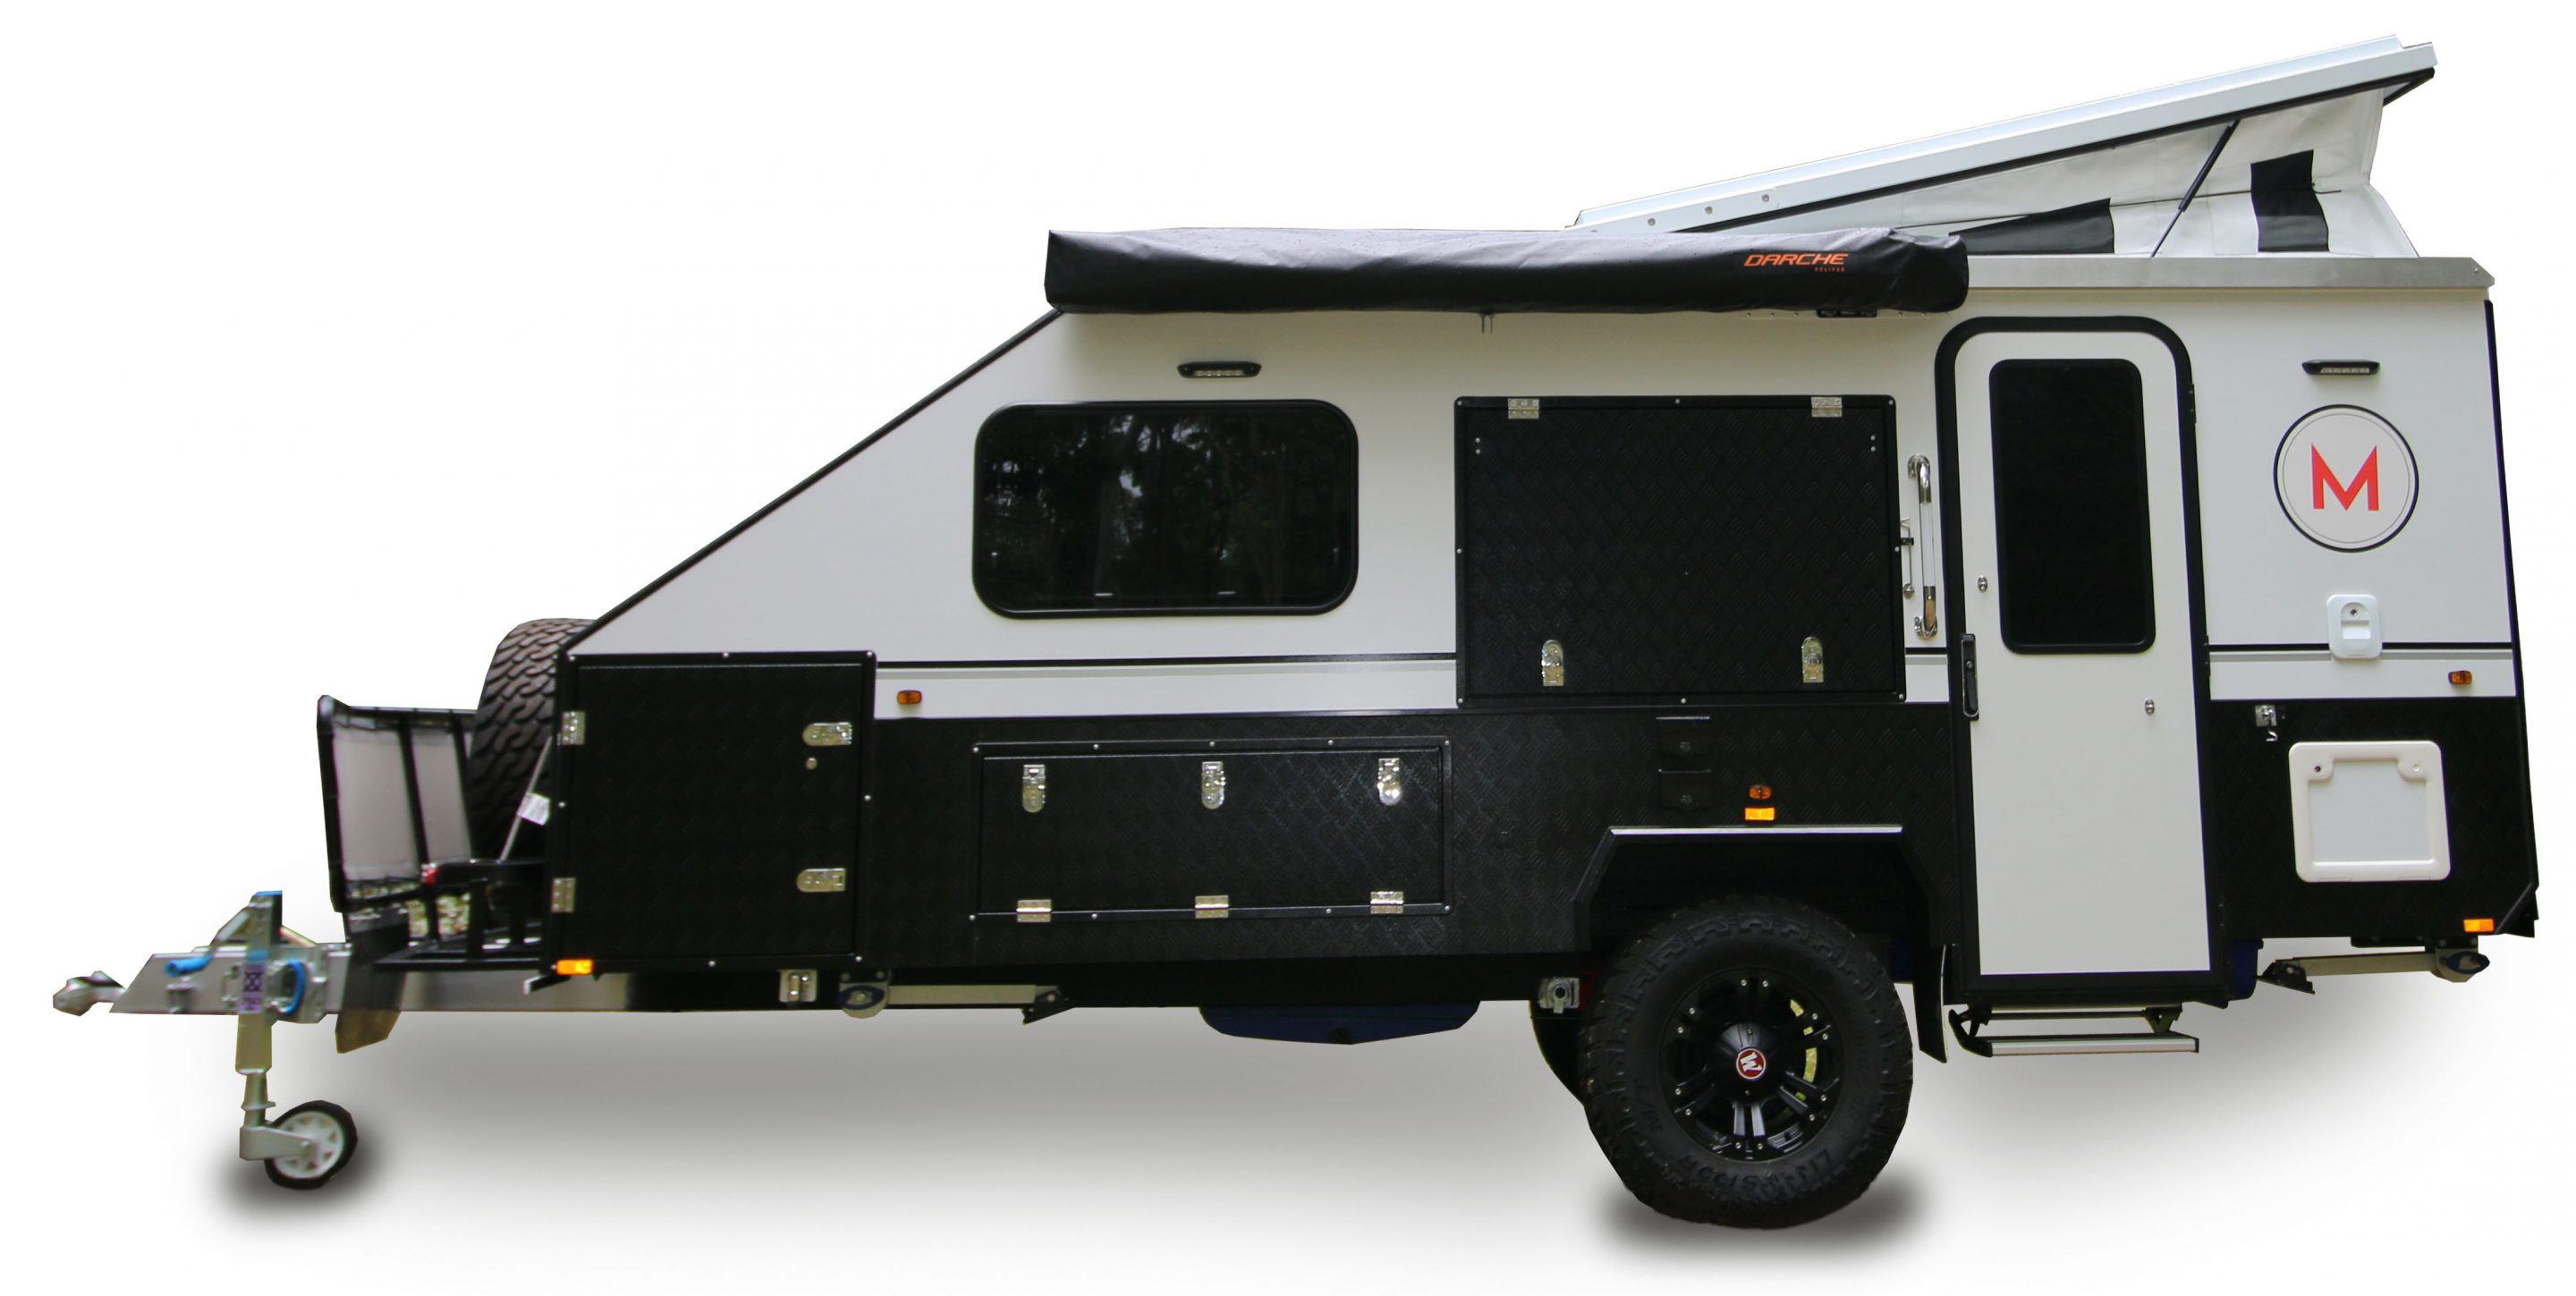 Modcon RV hybrid camper trailers C3P passenger side